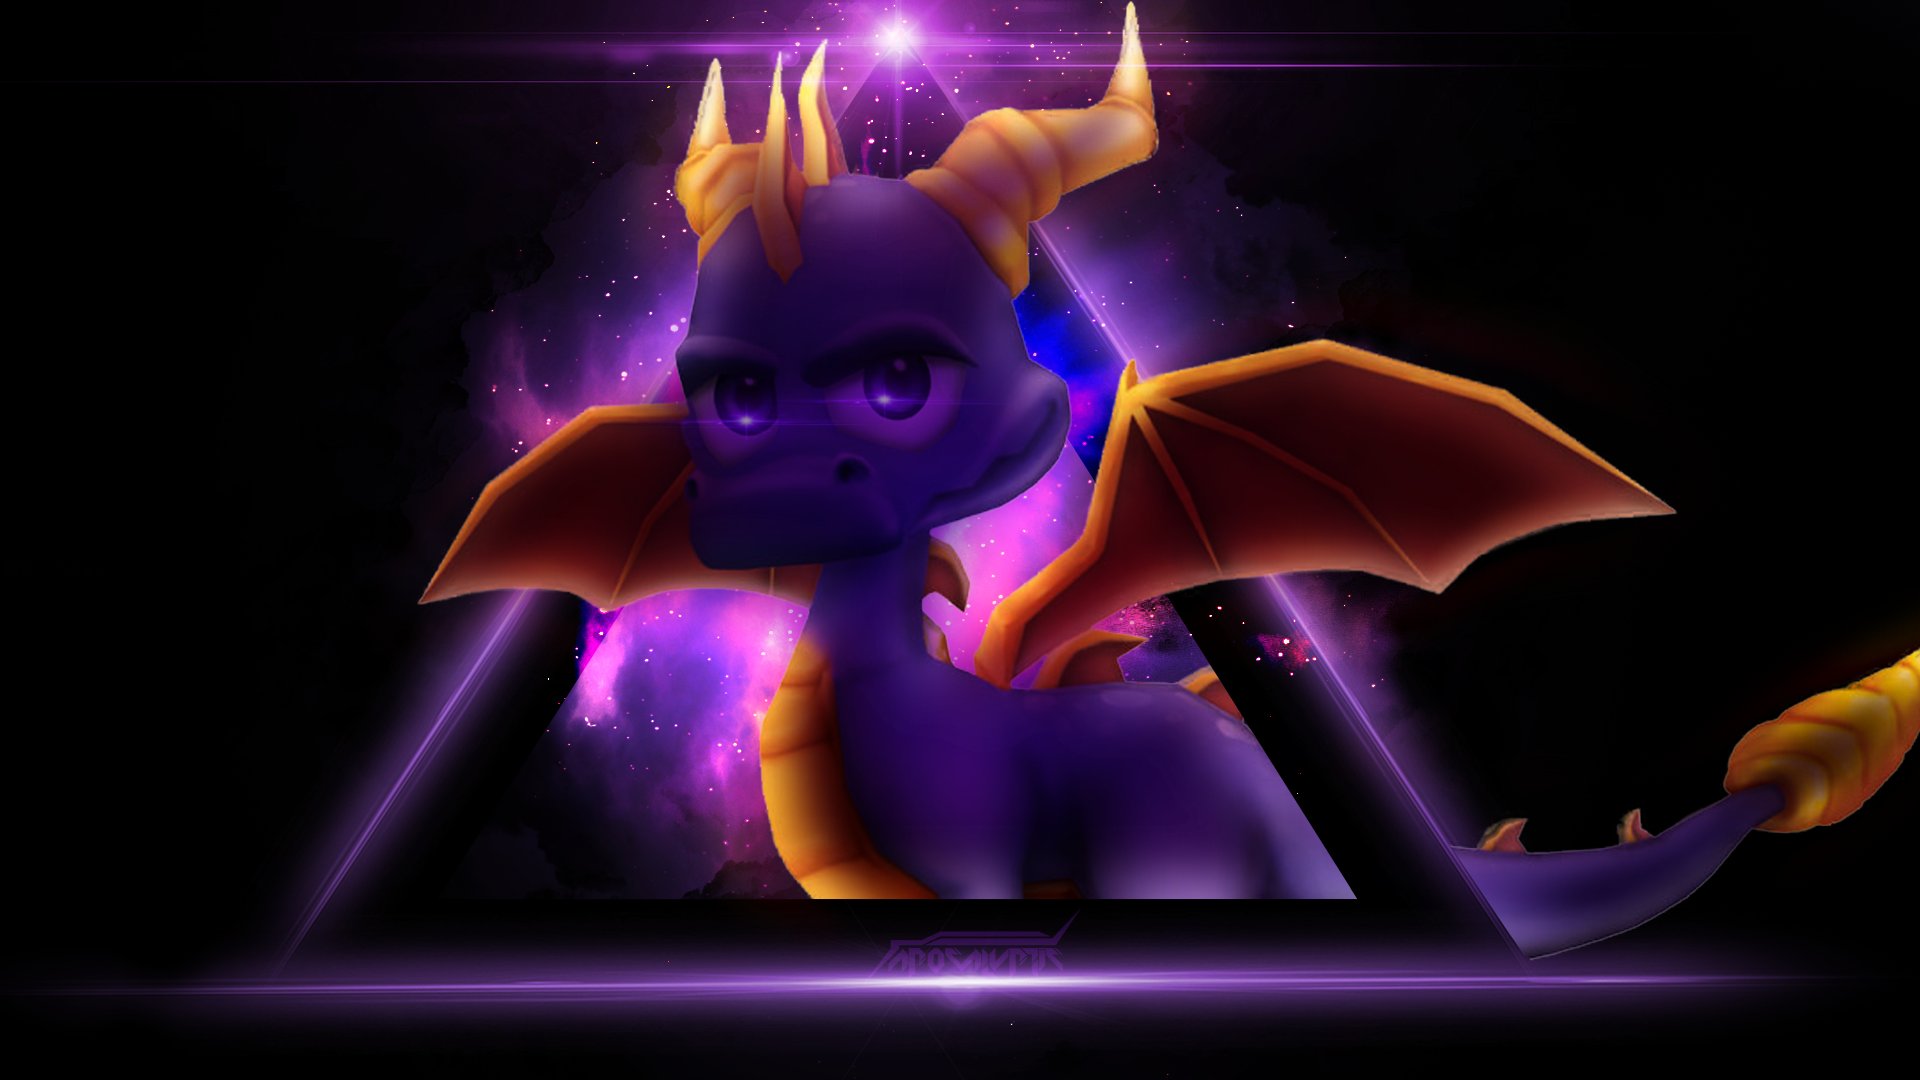 Video Game Spyro the Dragon HD Wallpaper Background Image.